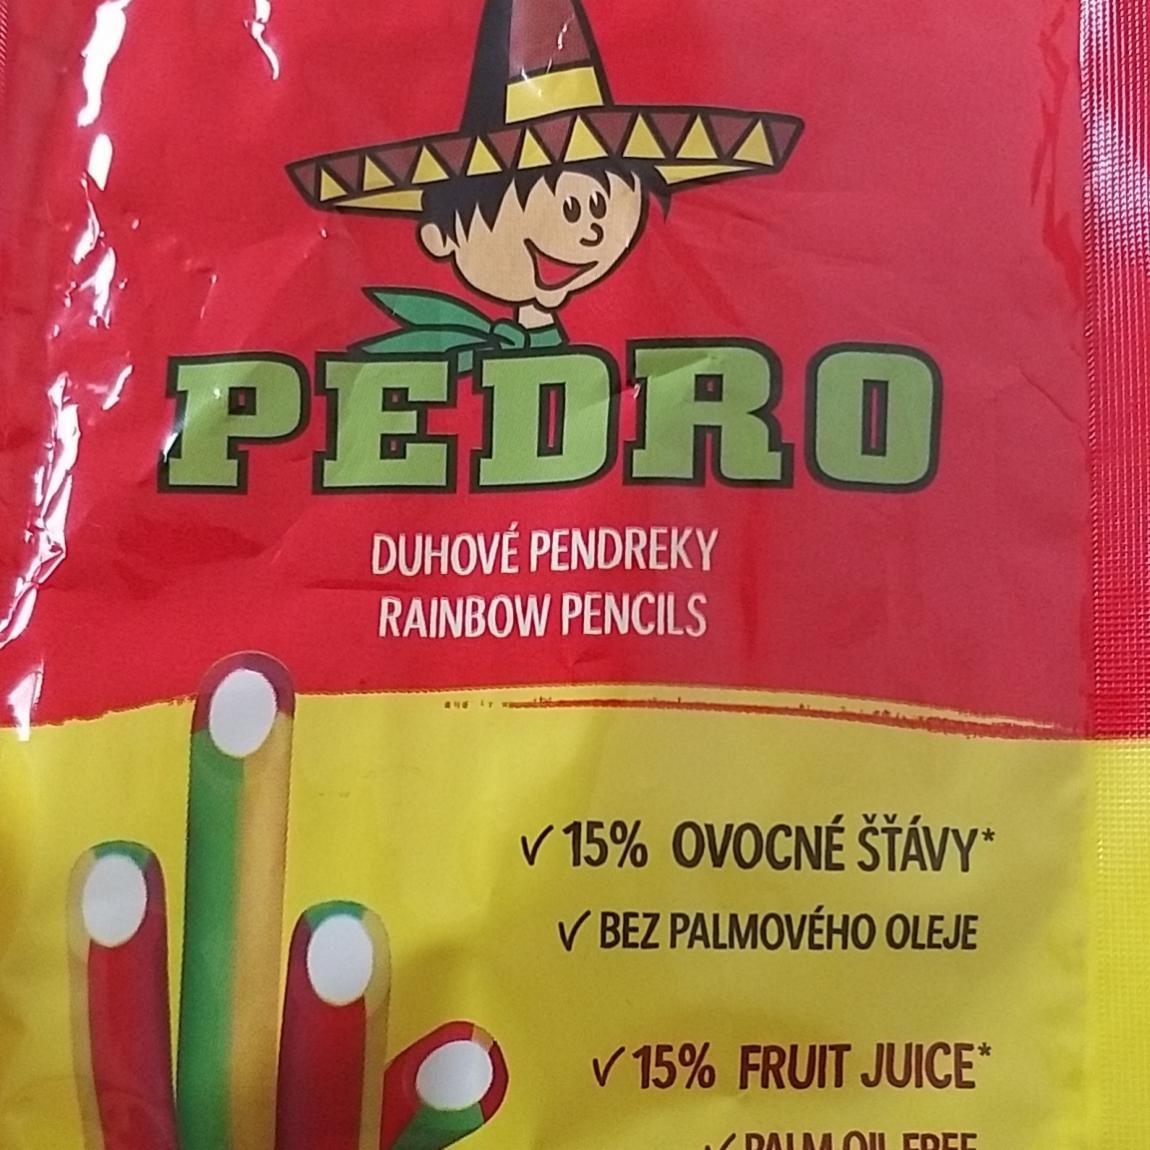 Képek - Rainbow pencils Pedro